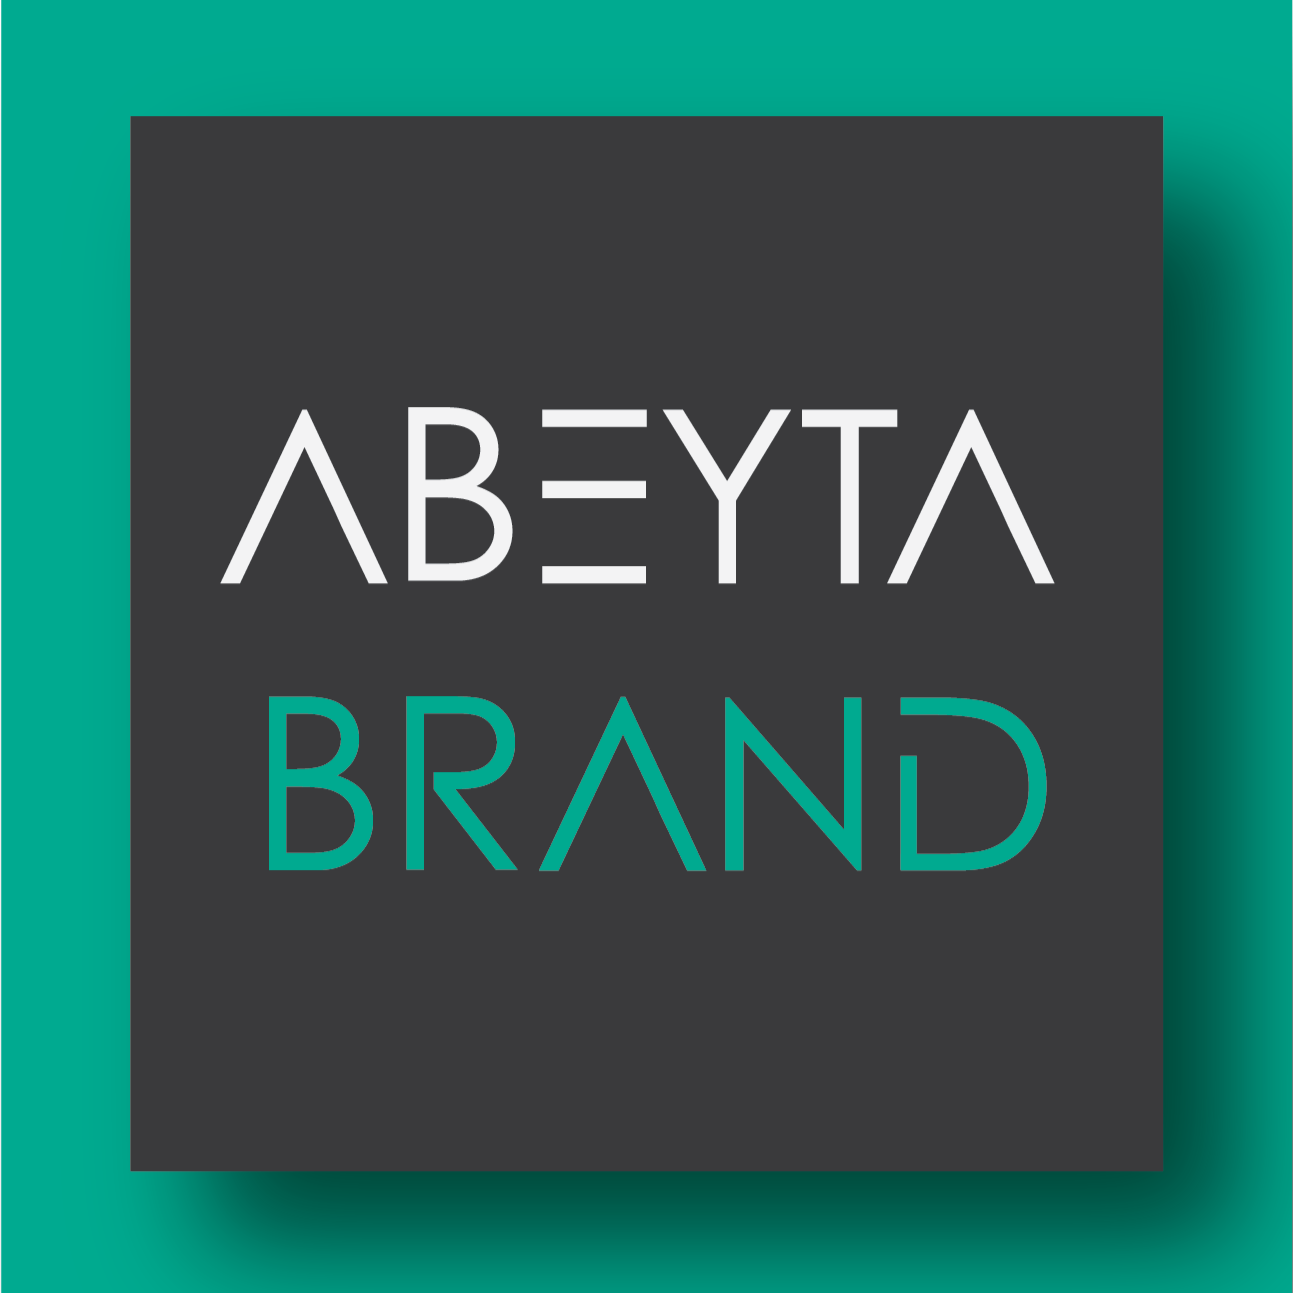 Abeyta Brand and Abeyta Design